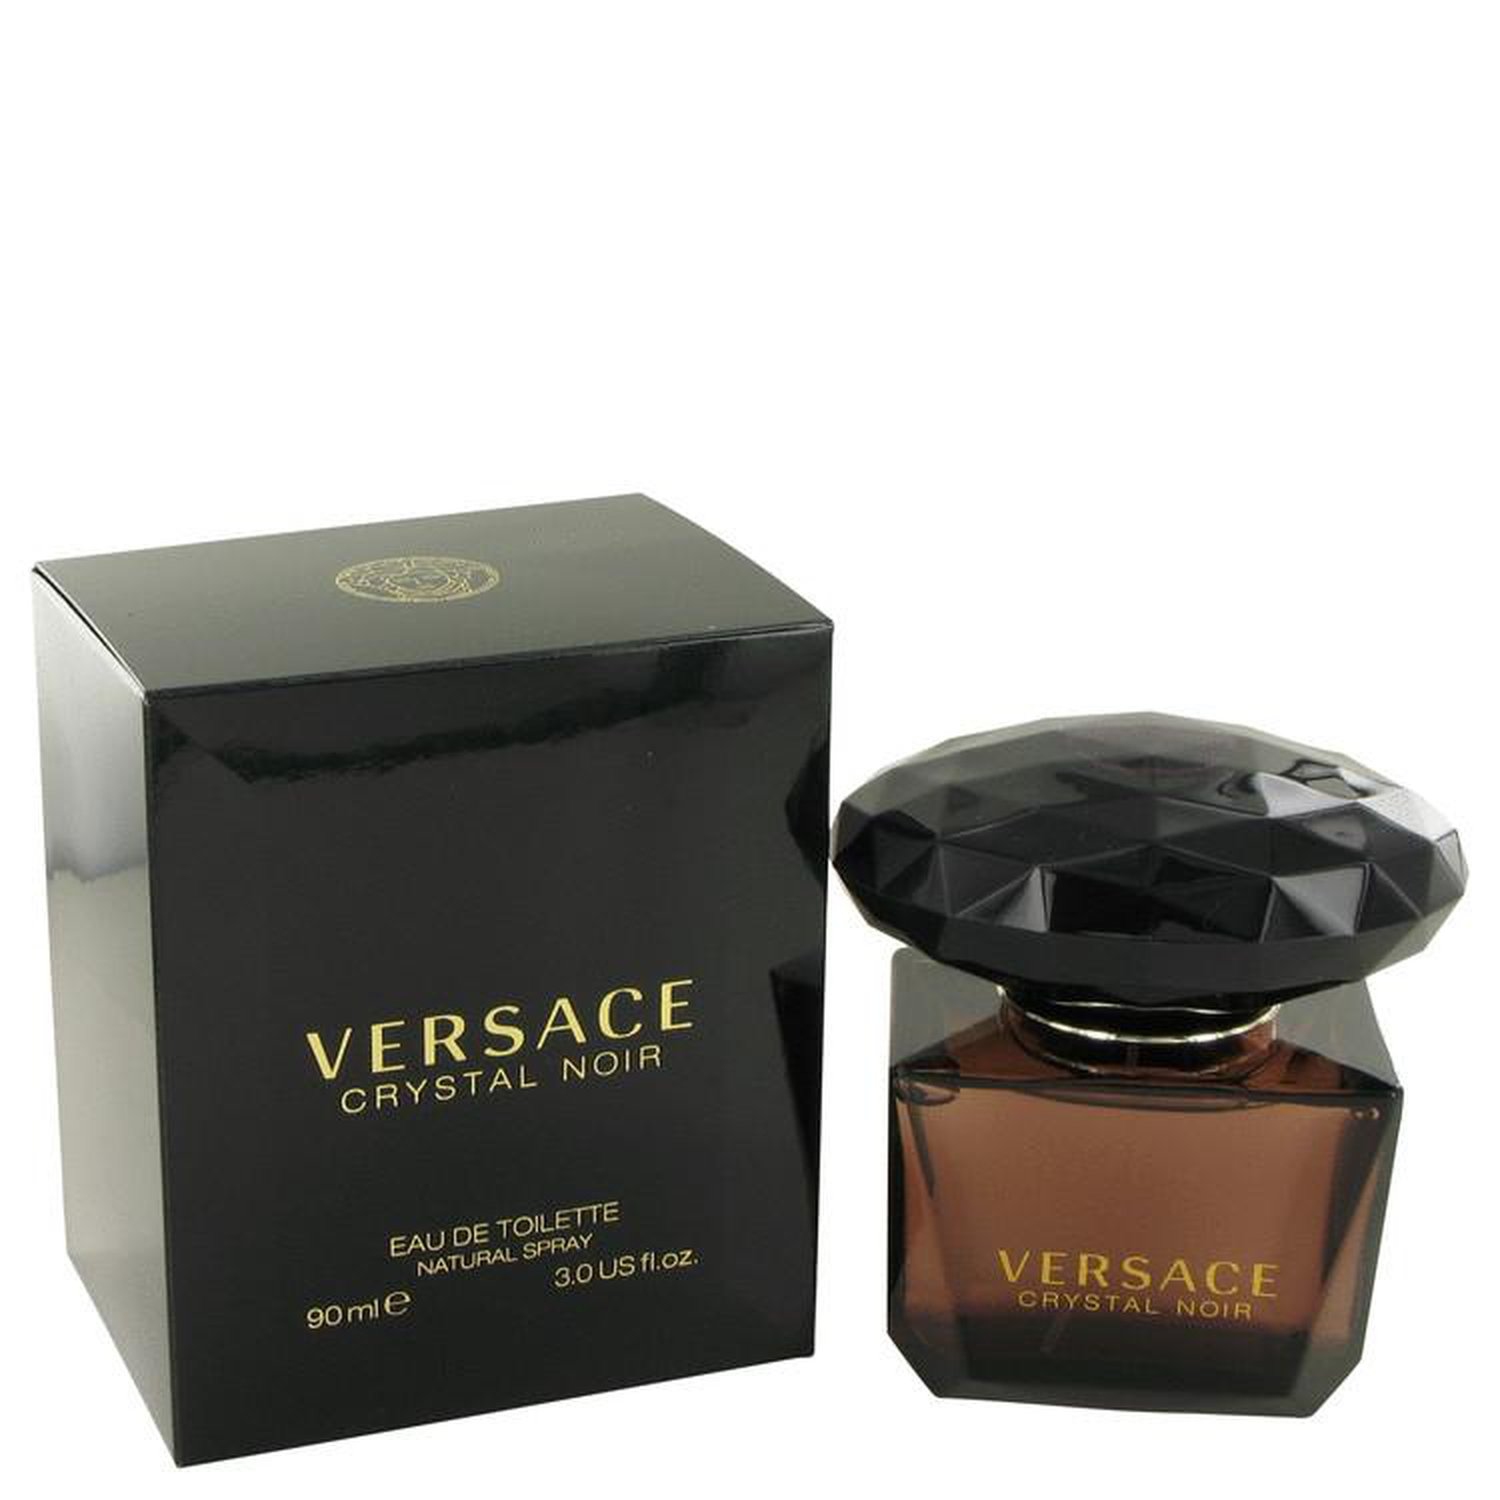 Versace Crystal Noir For Women 90ml Eau De Toilette Spray